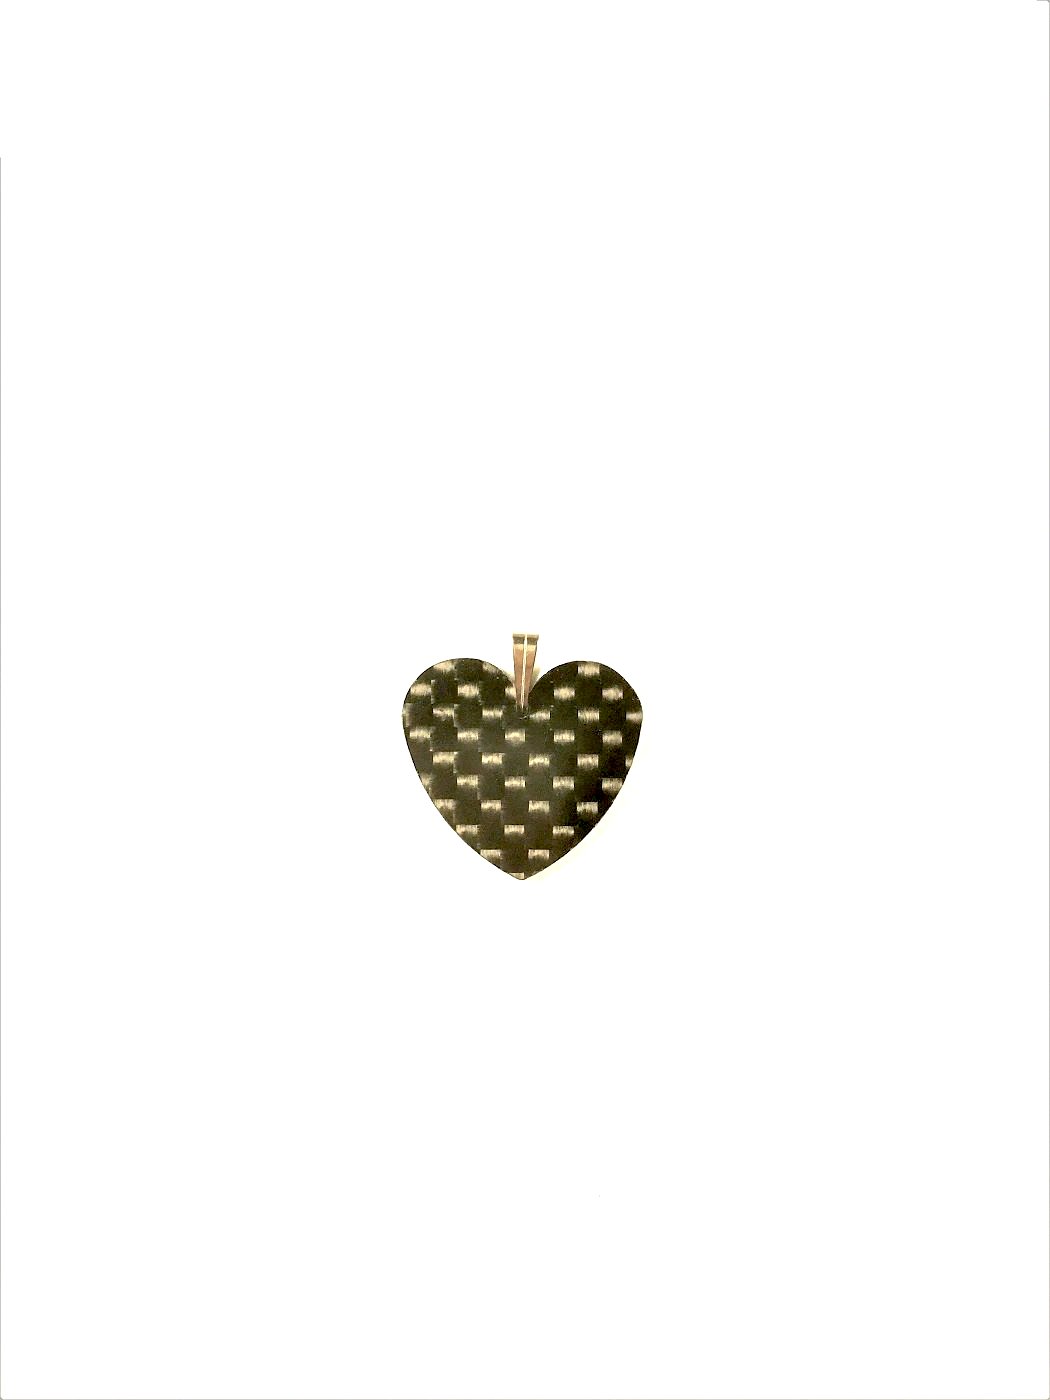 Love Hearts Love Carbon Fiber Jewels Square / Heart Pendentif Collier Necklace